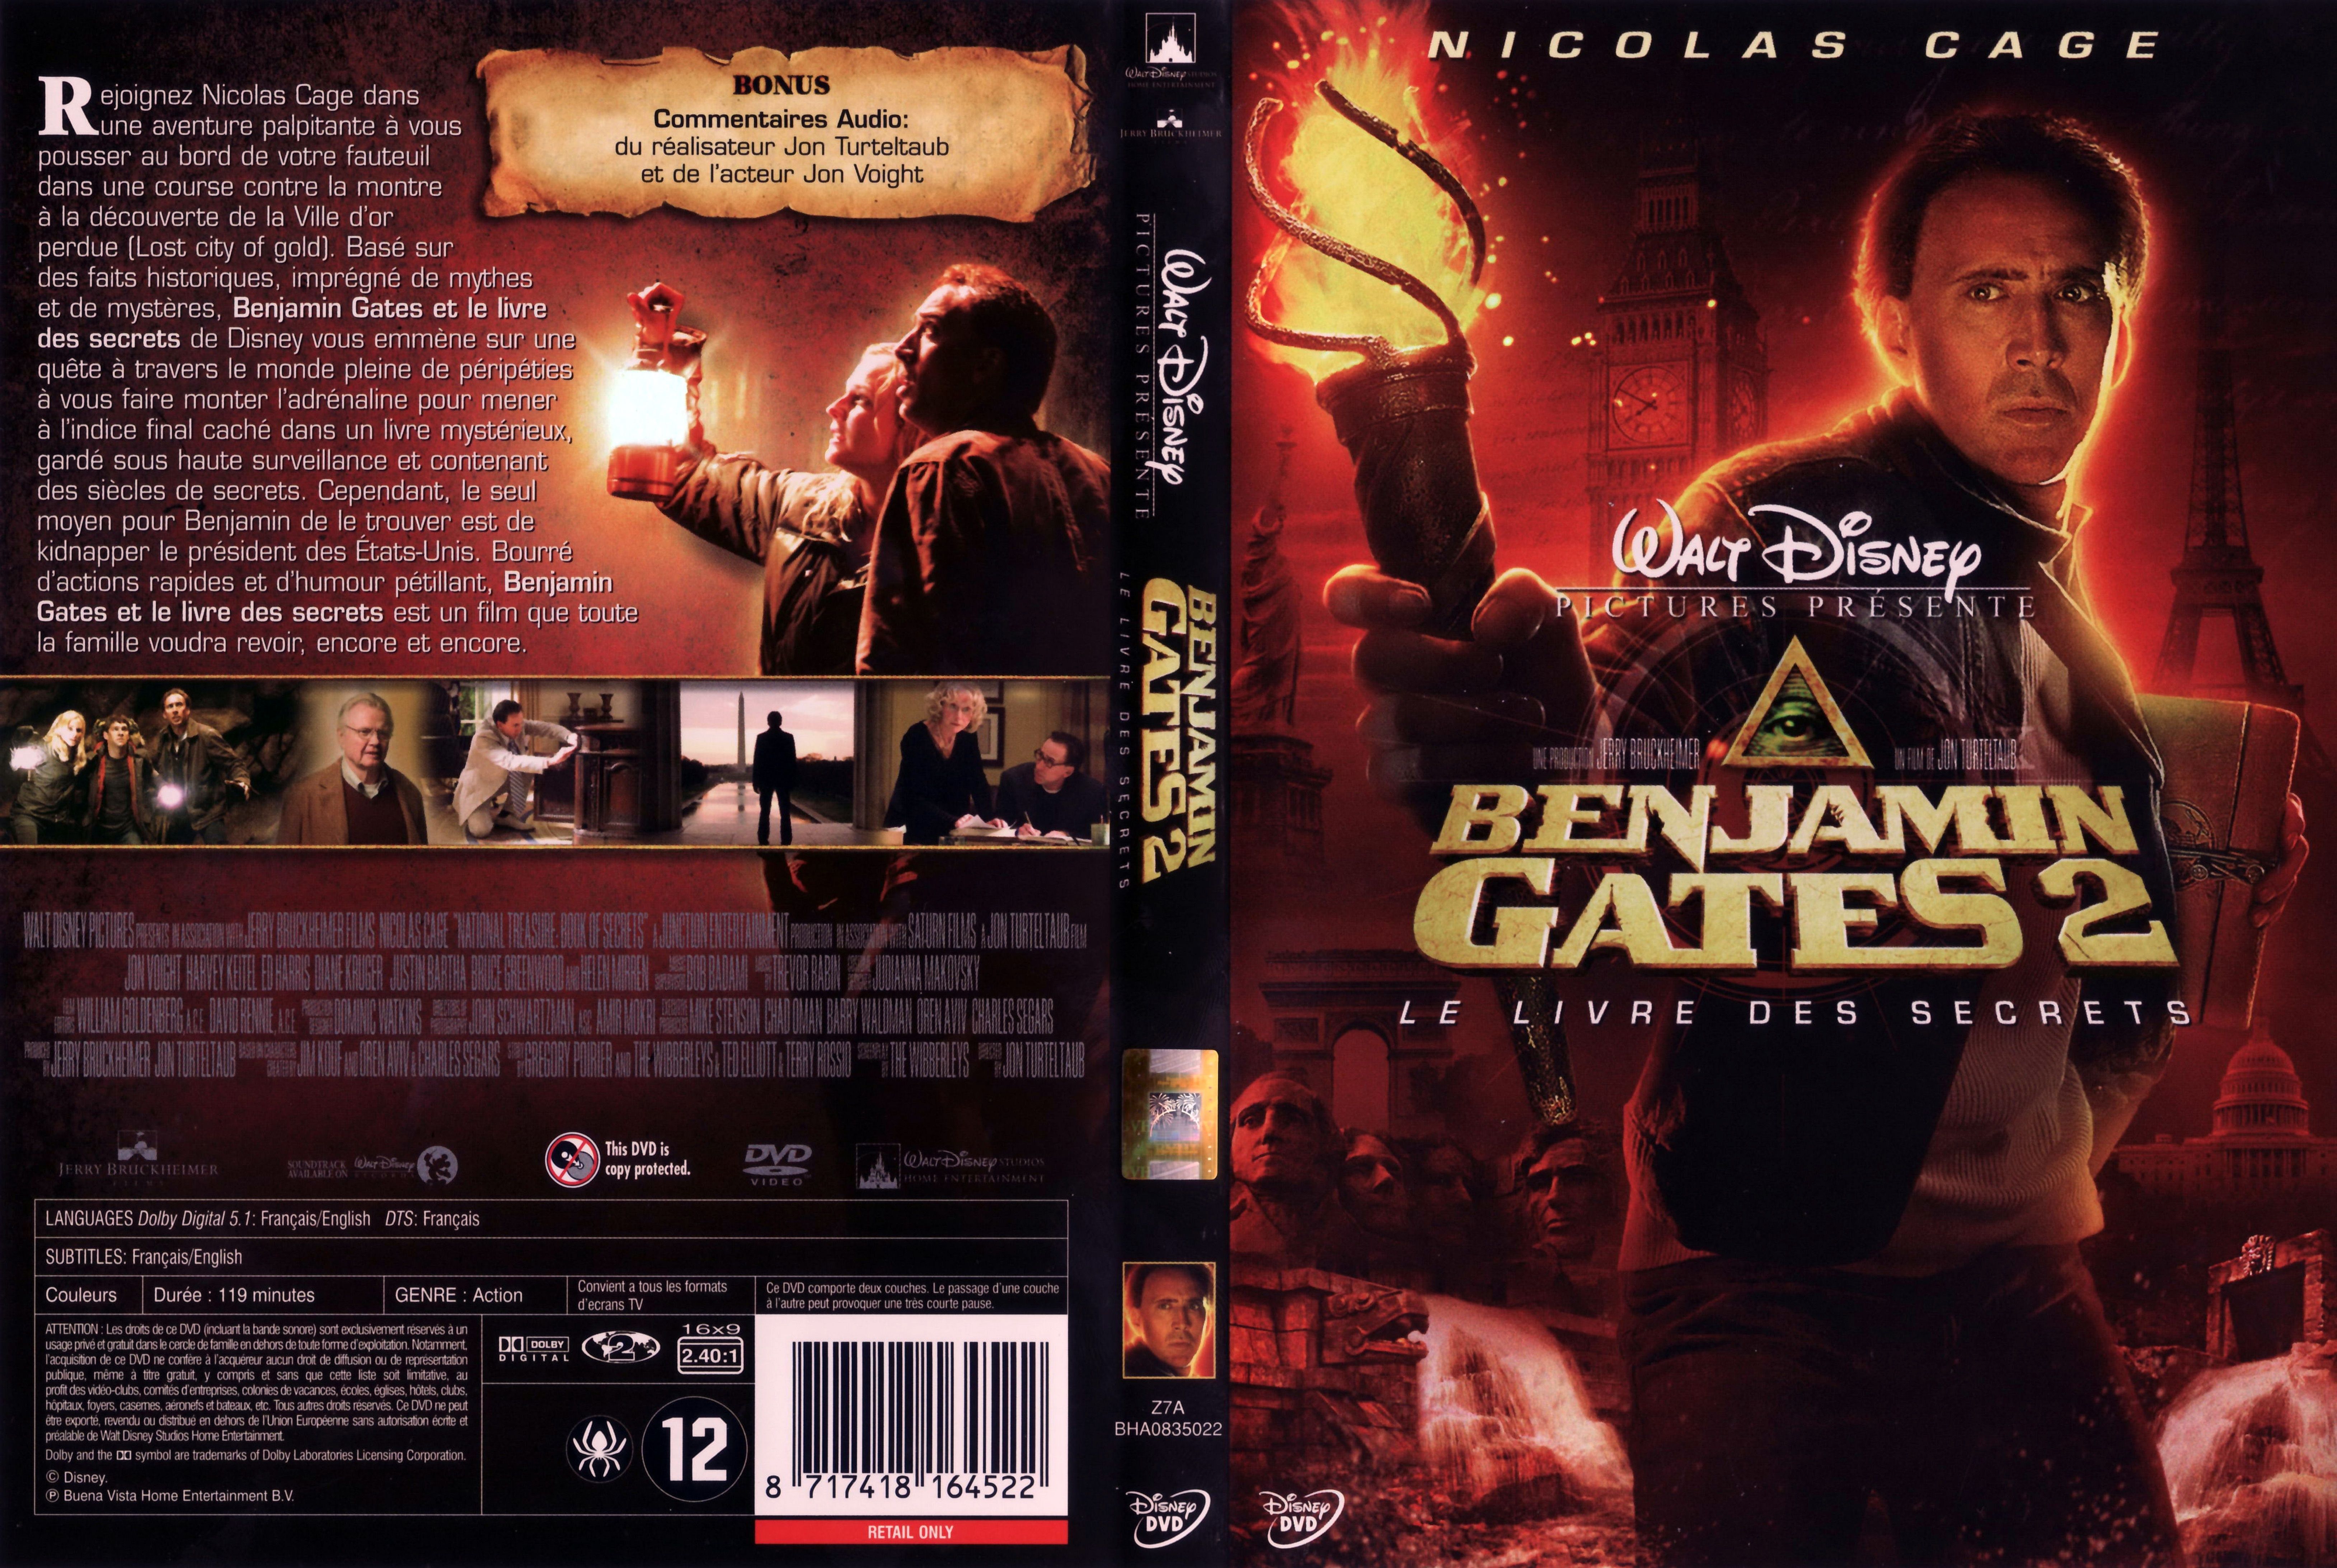 Jaquette DVD Benjamin Gates et le livre des secrets v2